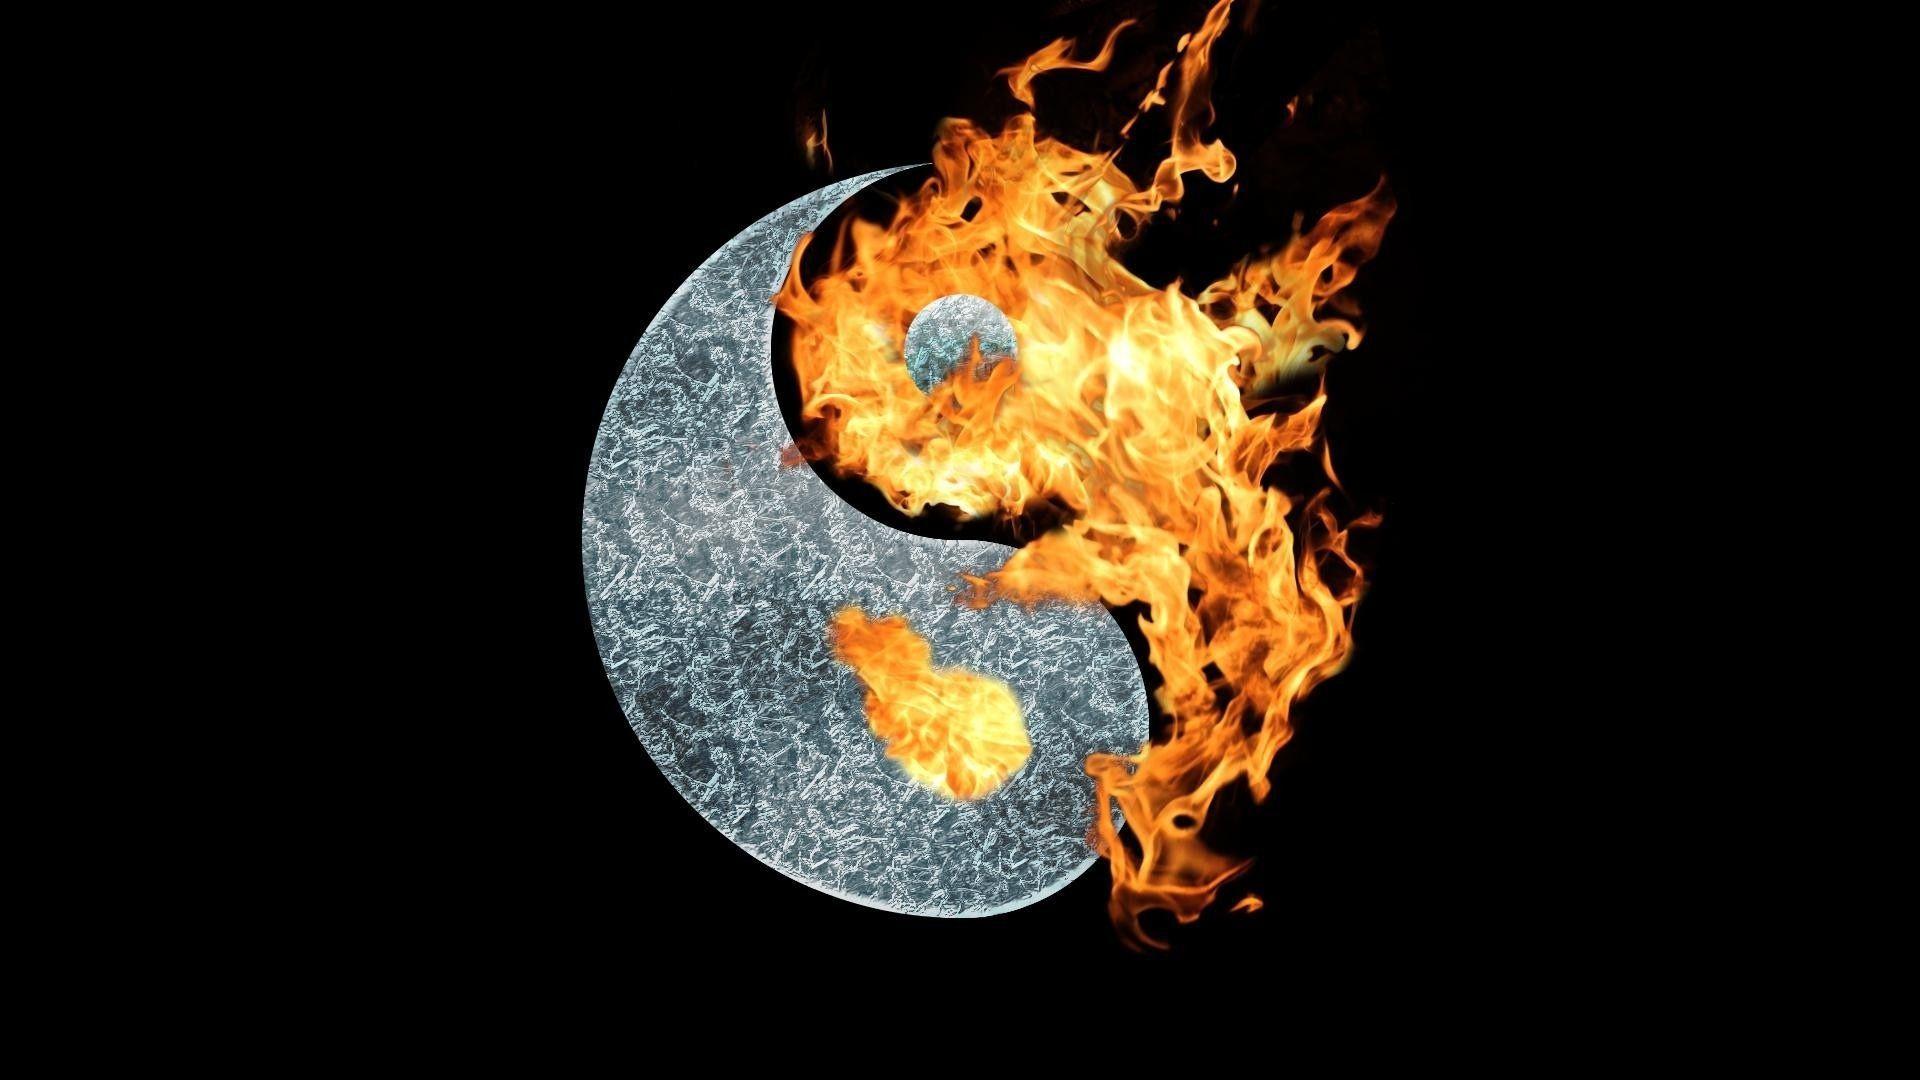 Wallpaper.wiki New Cool Fire Yin Yang Symbol Wallpaper Hd For Des